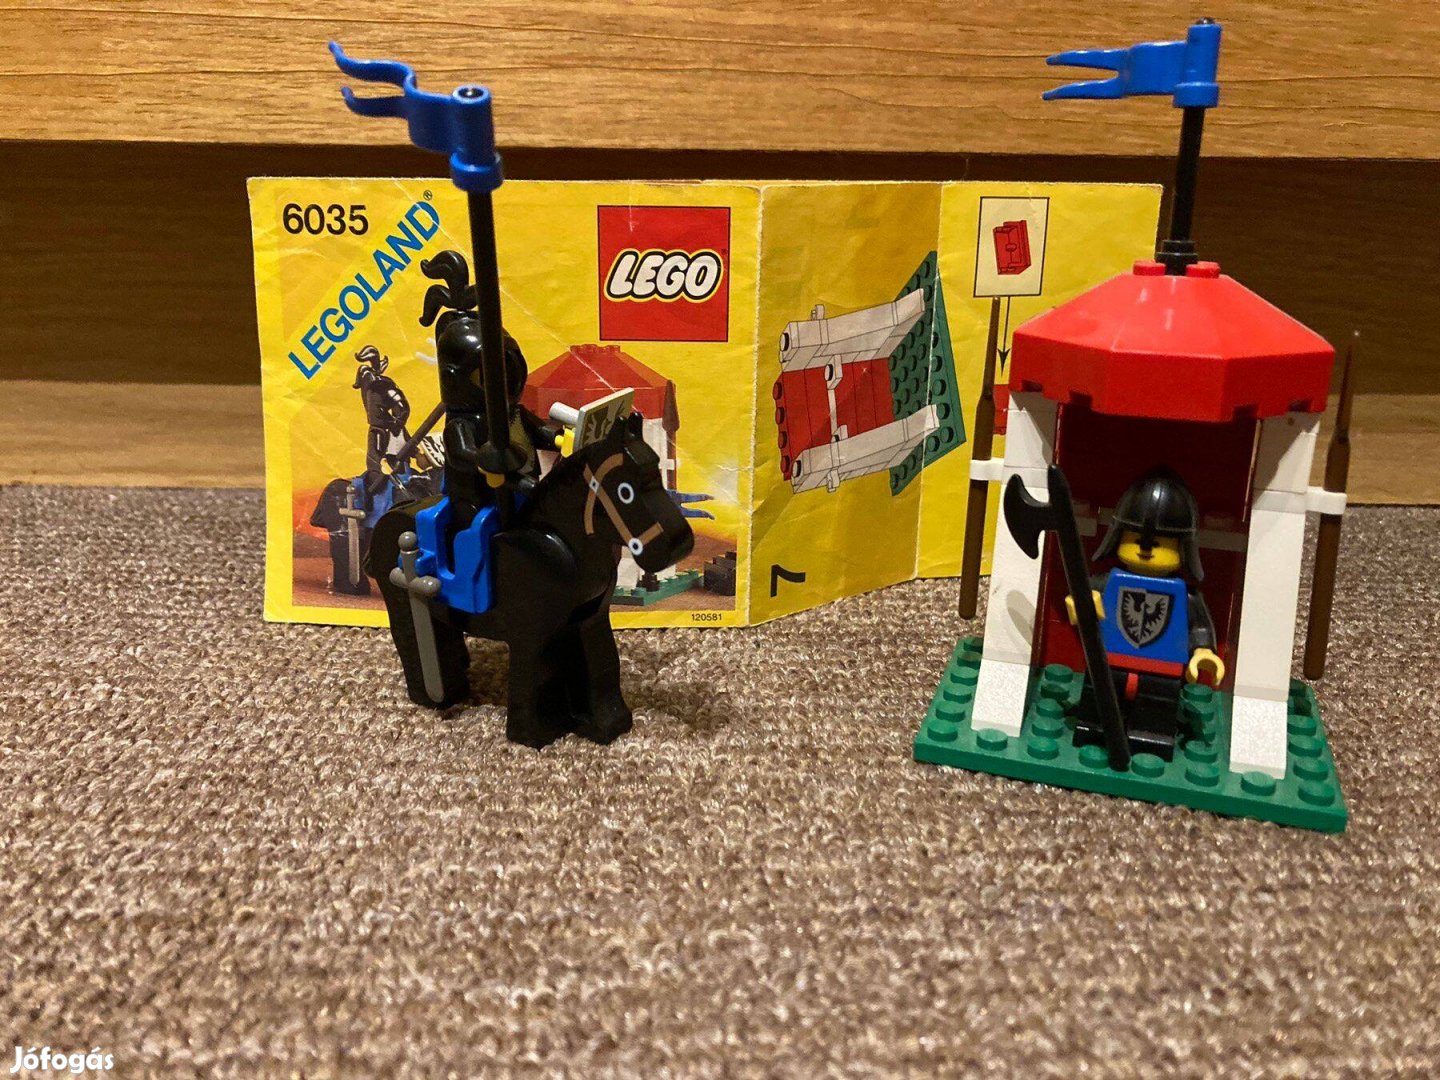 Lego 6035 Castle